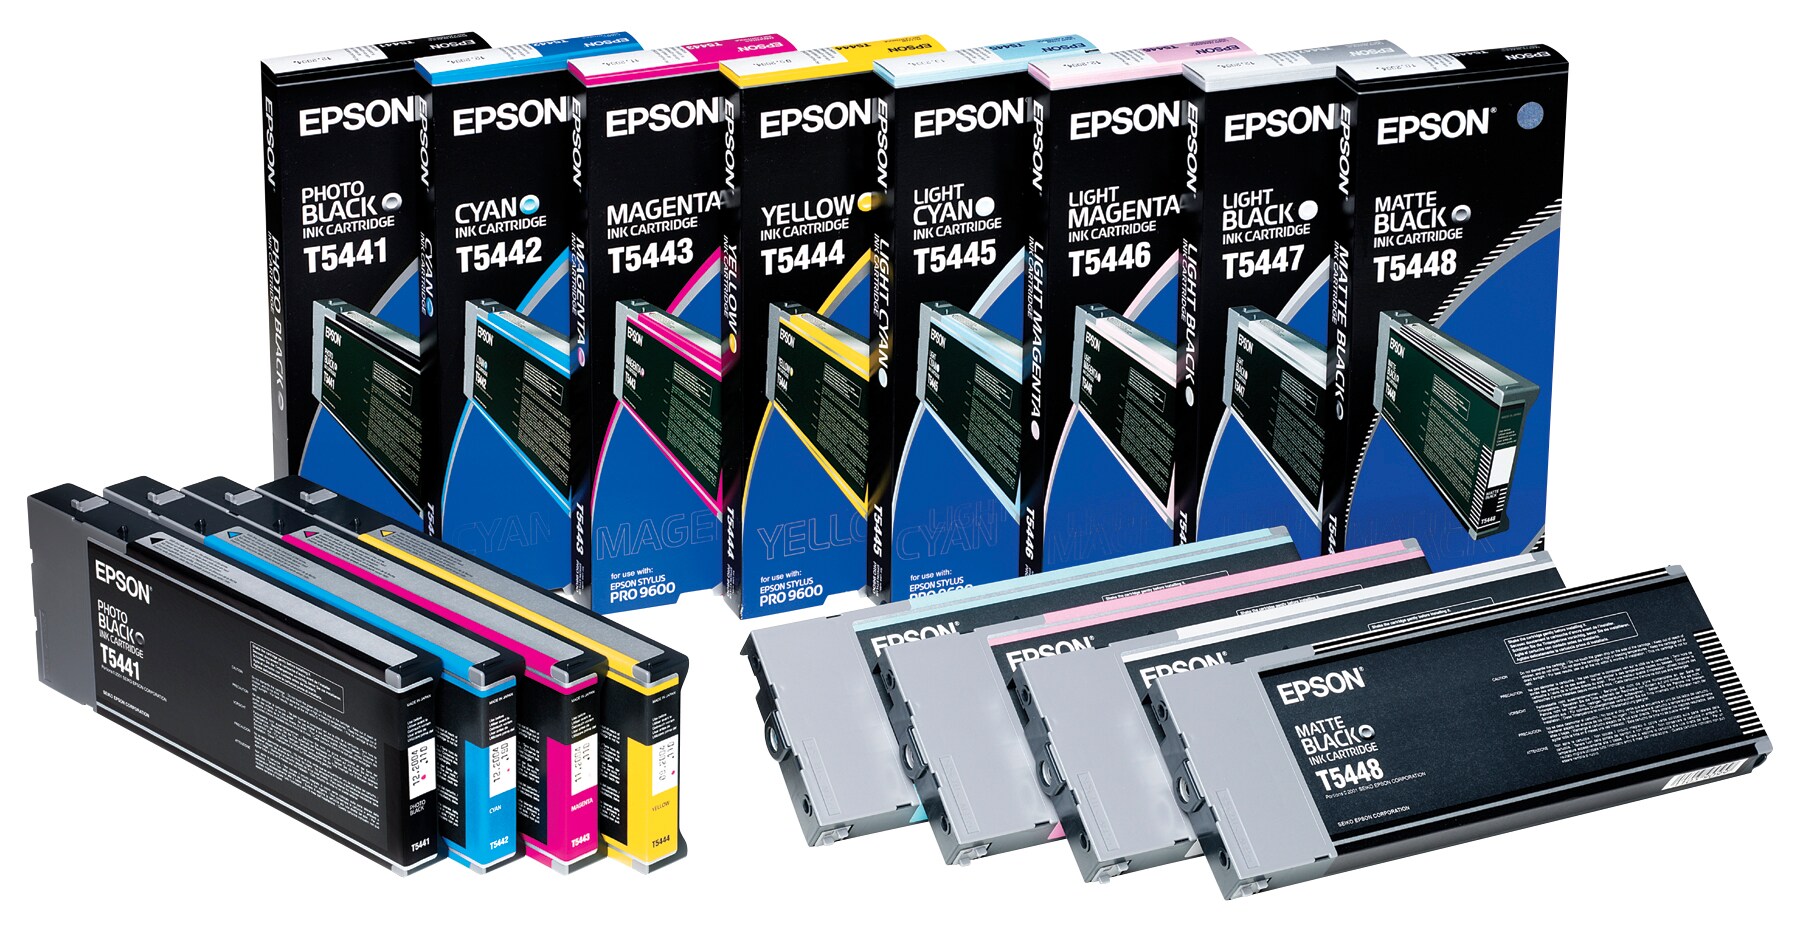 Epson UltraChrome Light Black Ink Cartridge